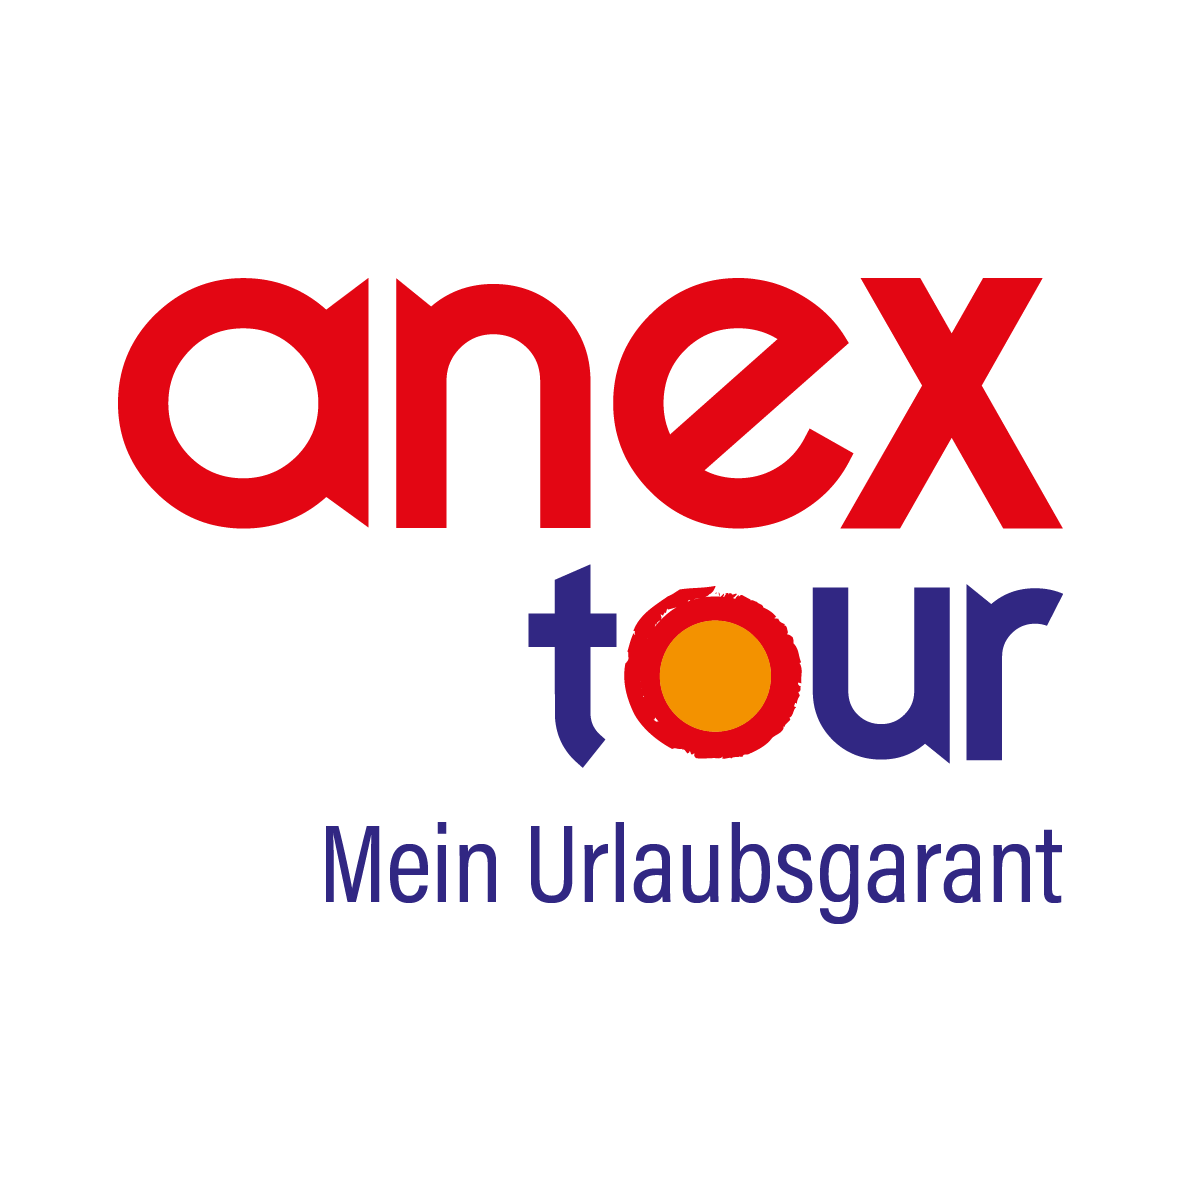 Anex Tour. "Анекс туризи". Abacus Center logo PNG.